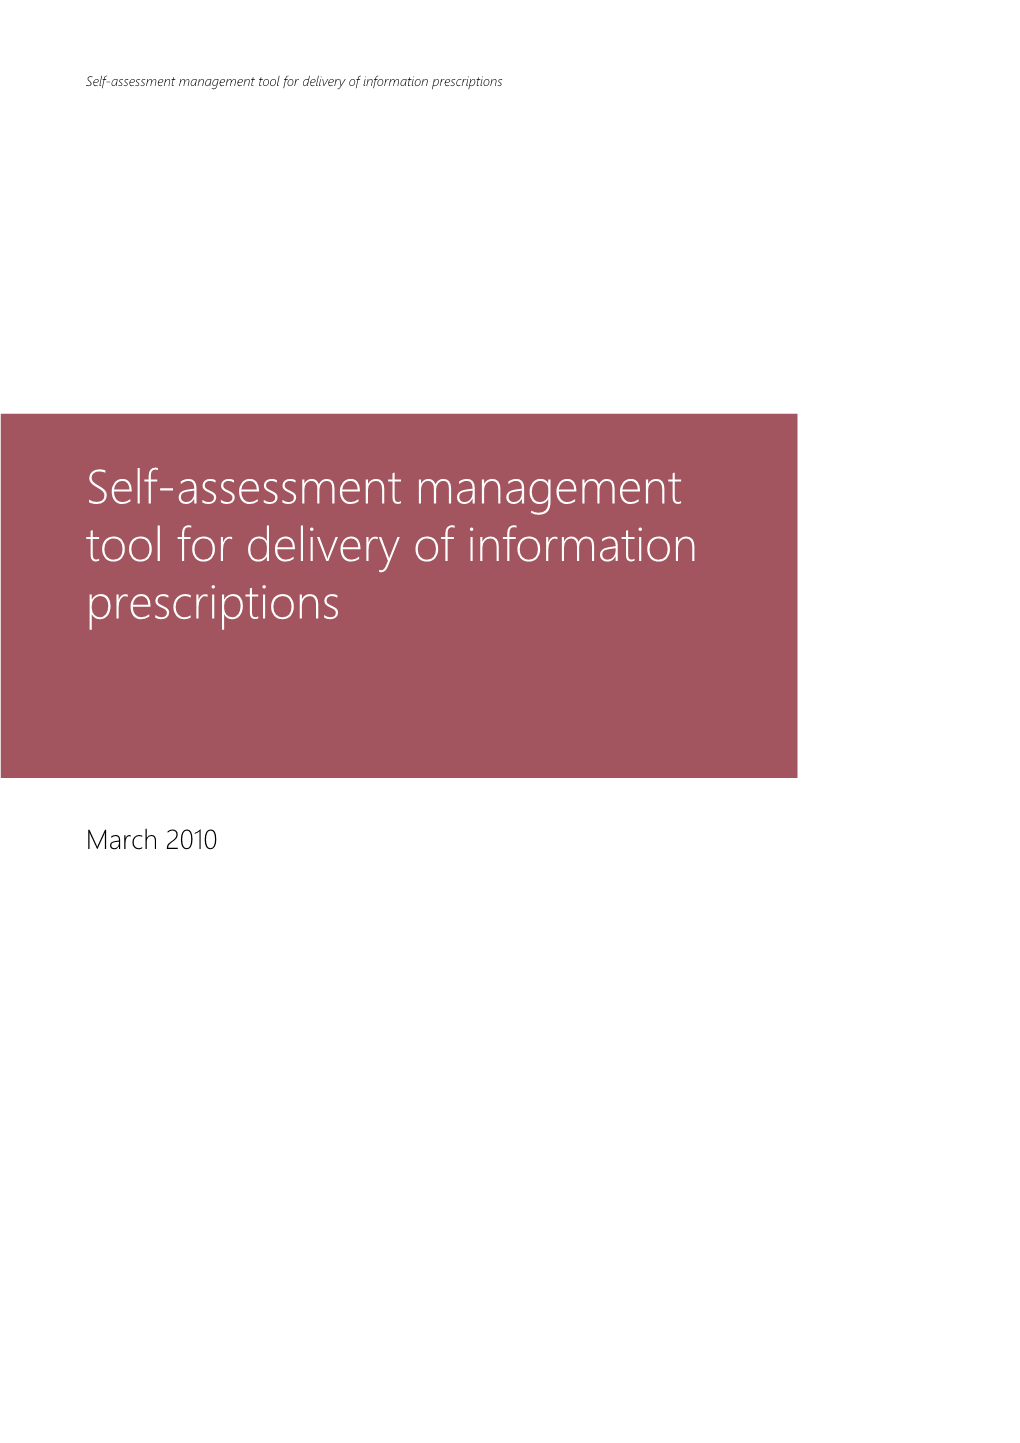 Self-Assessment Management